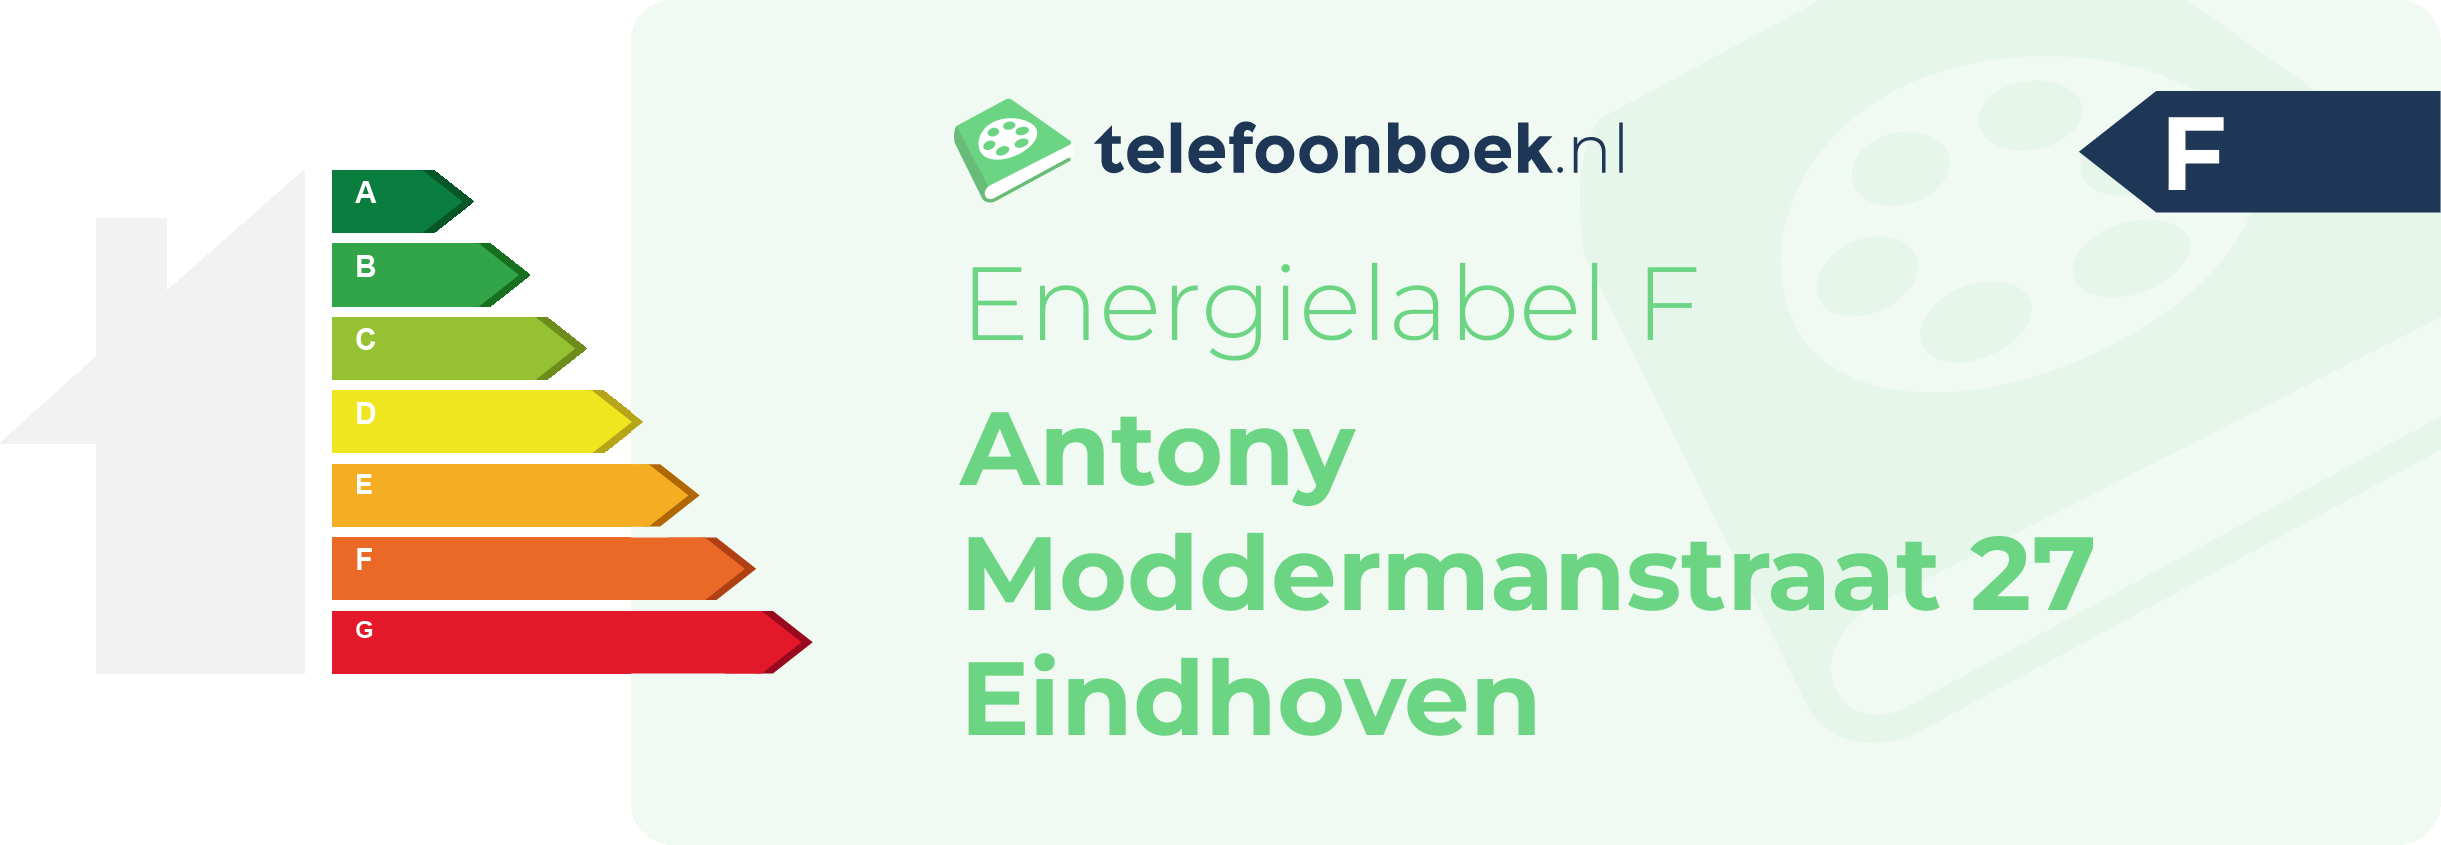 Energielabel Antony Moddermanstraat 27 Eindhoven